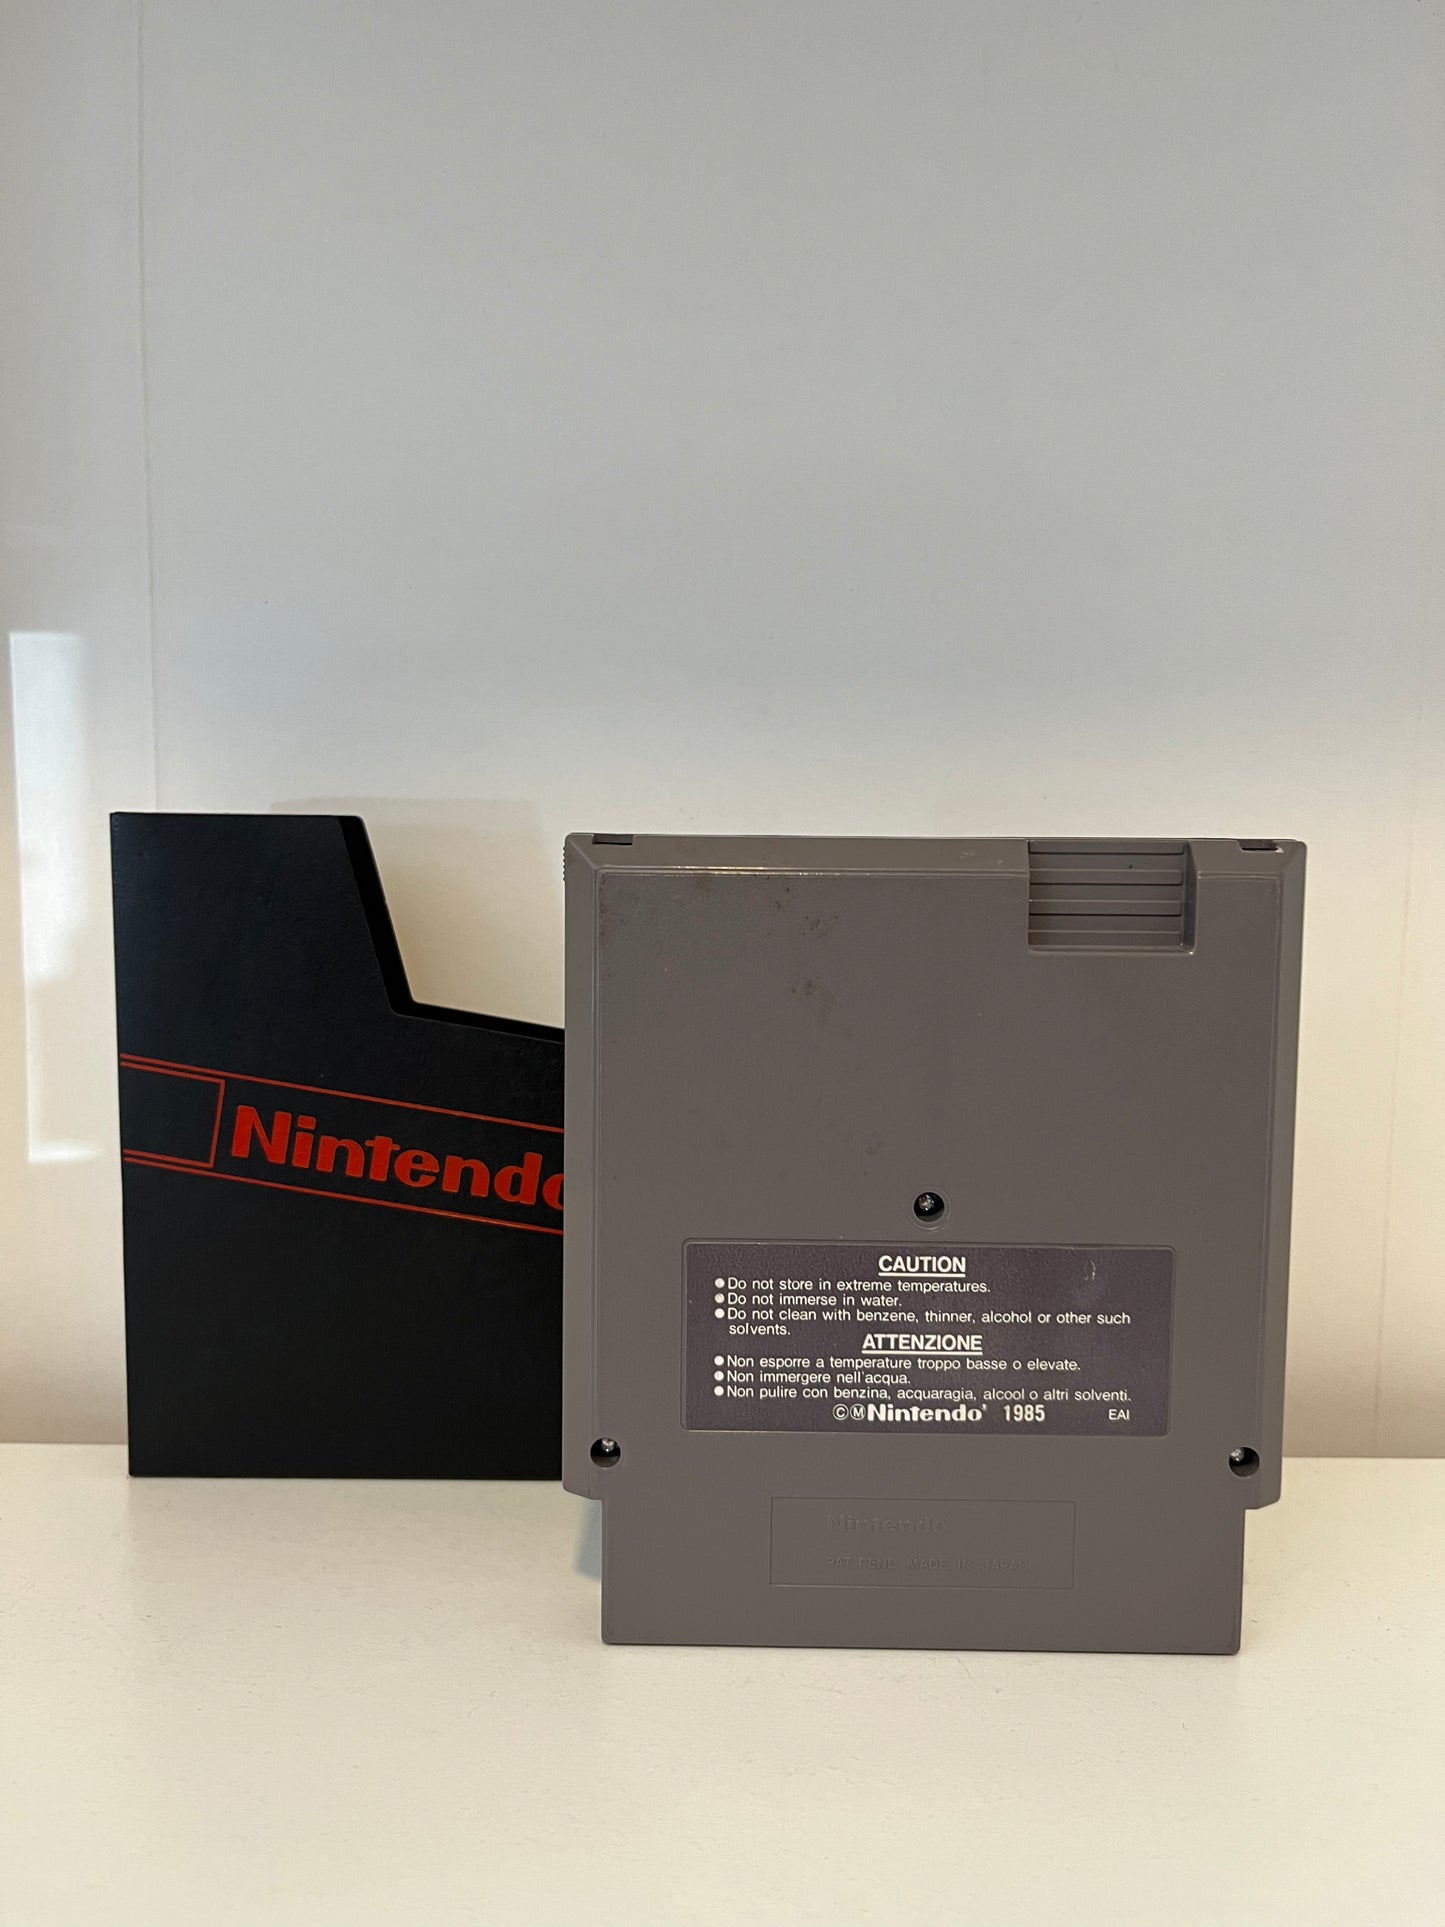 Fester's quest - Nintendo NES